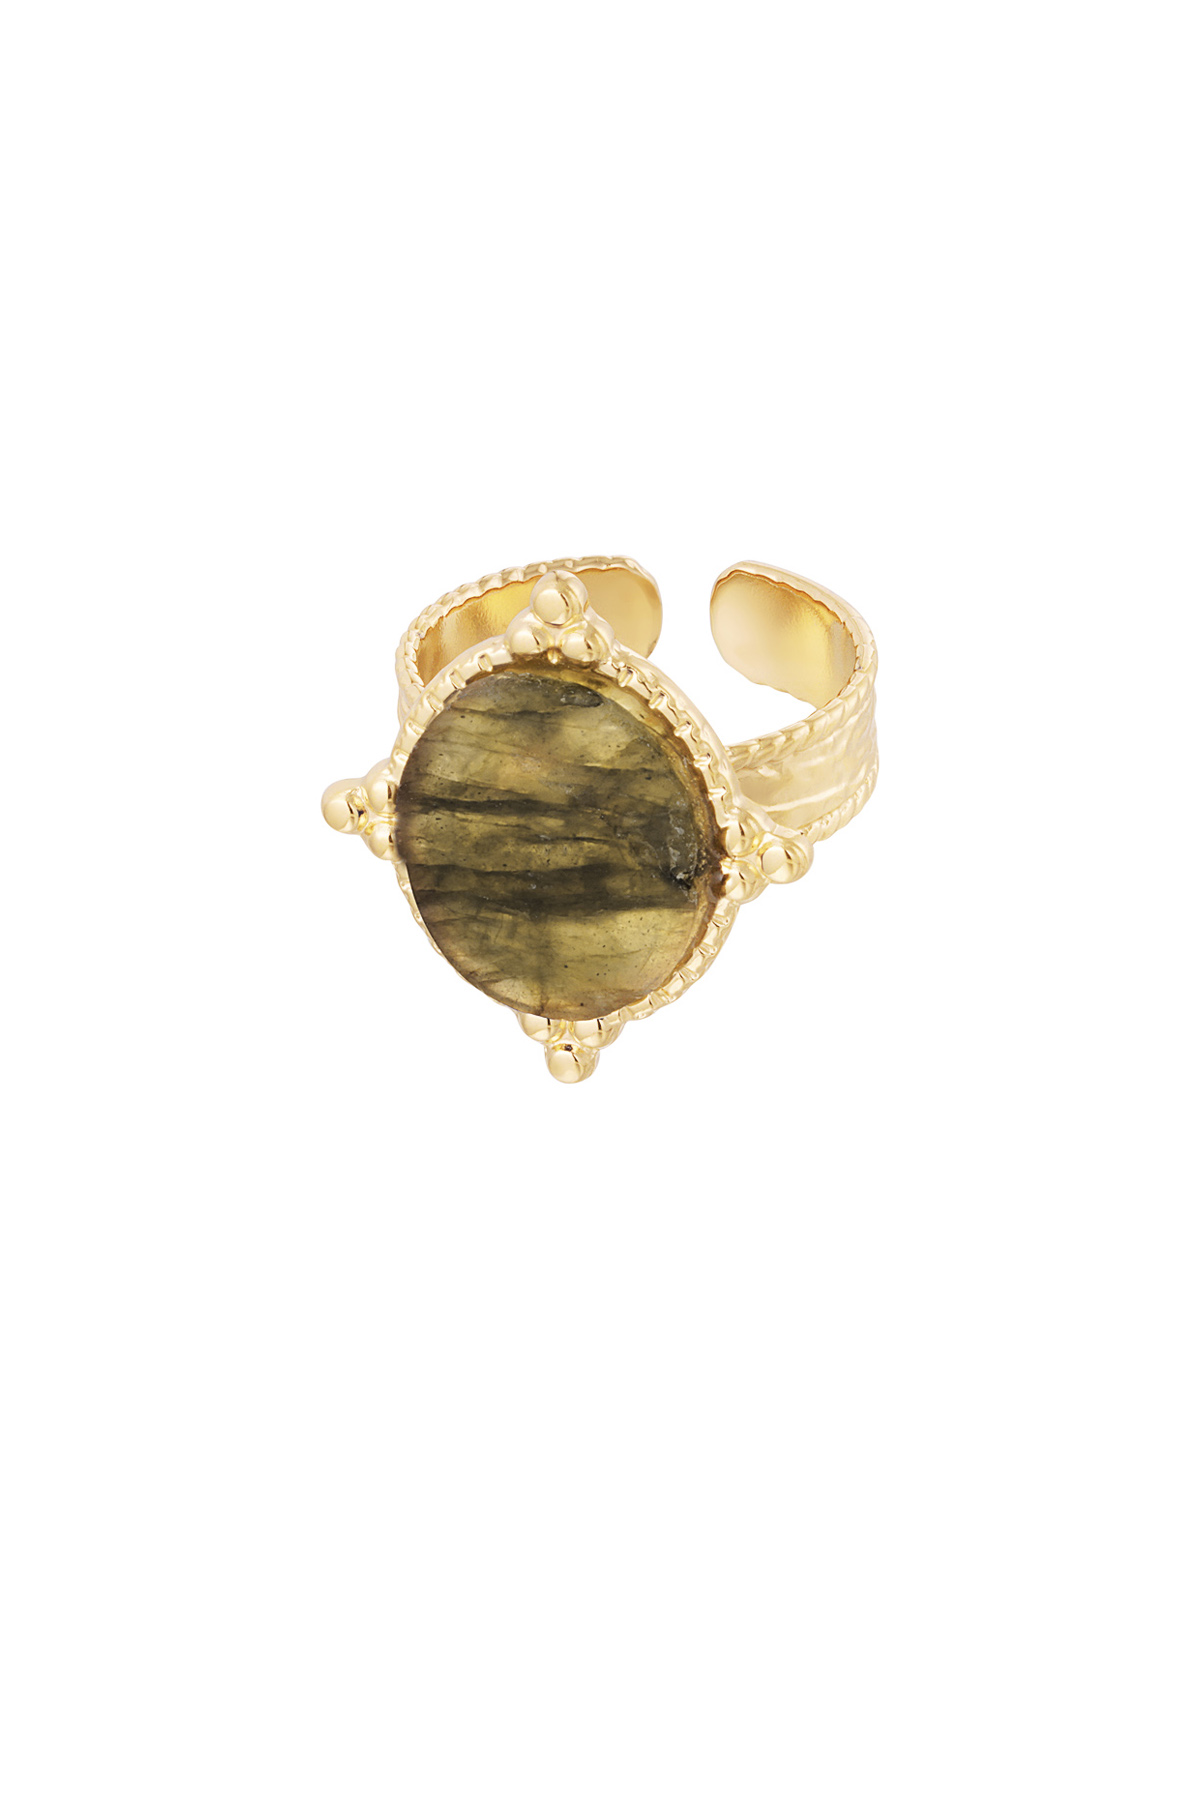 Ring steen met versiersel - goud/olijfgroen h5 